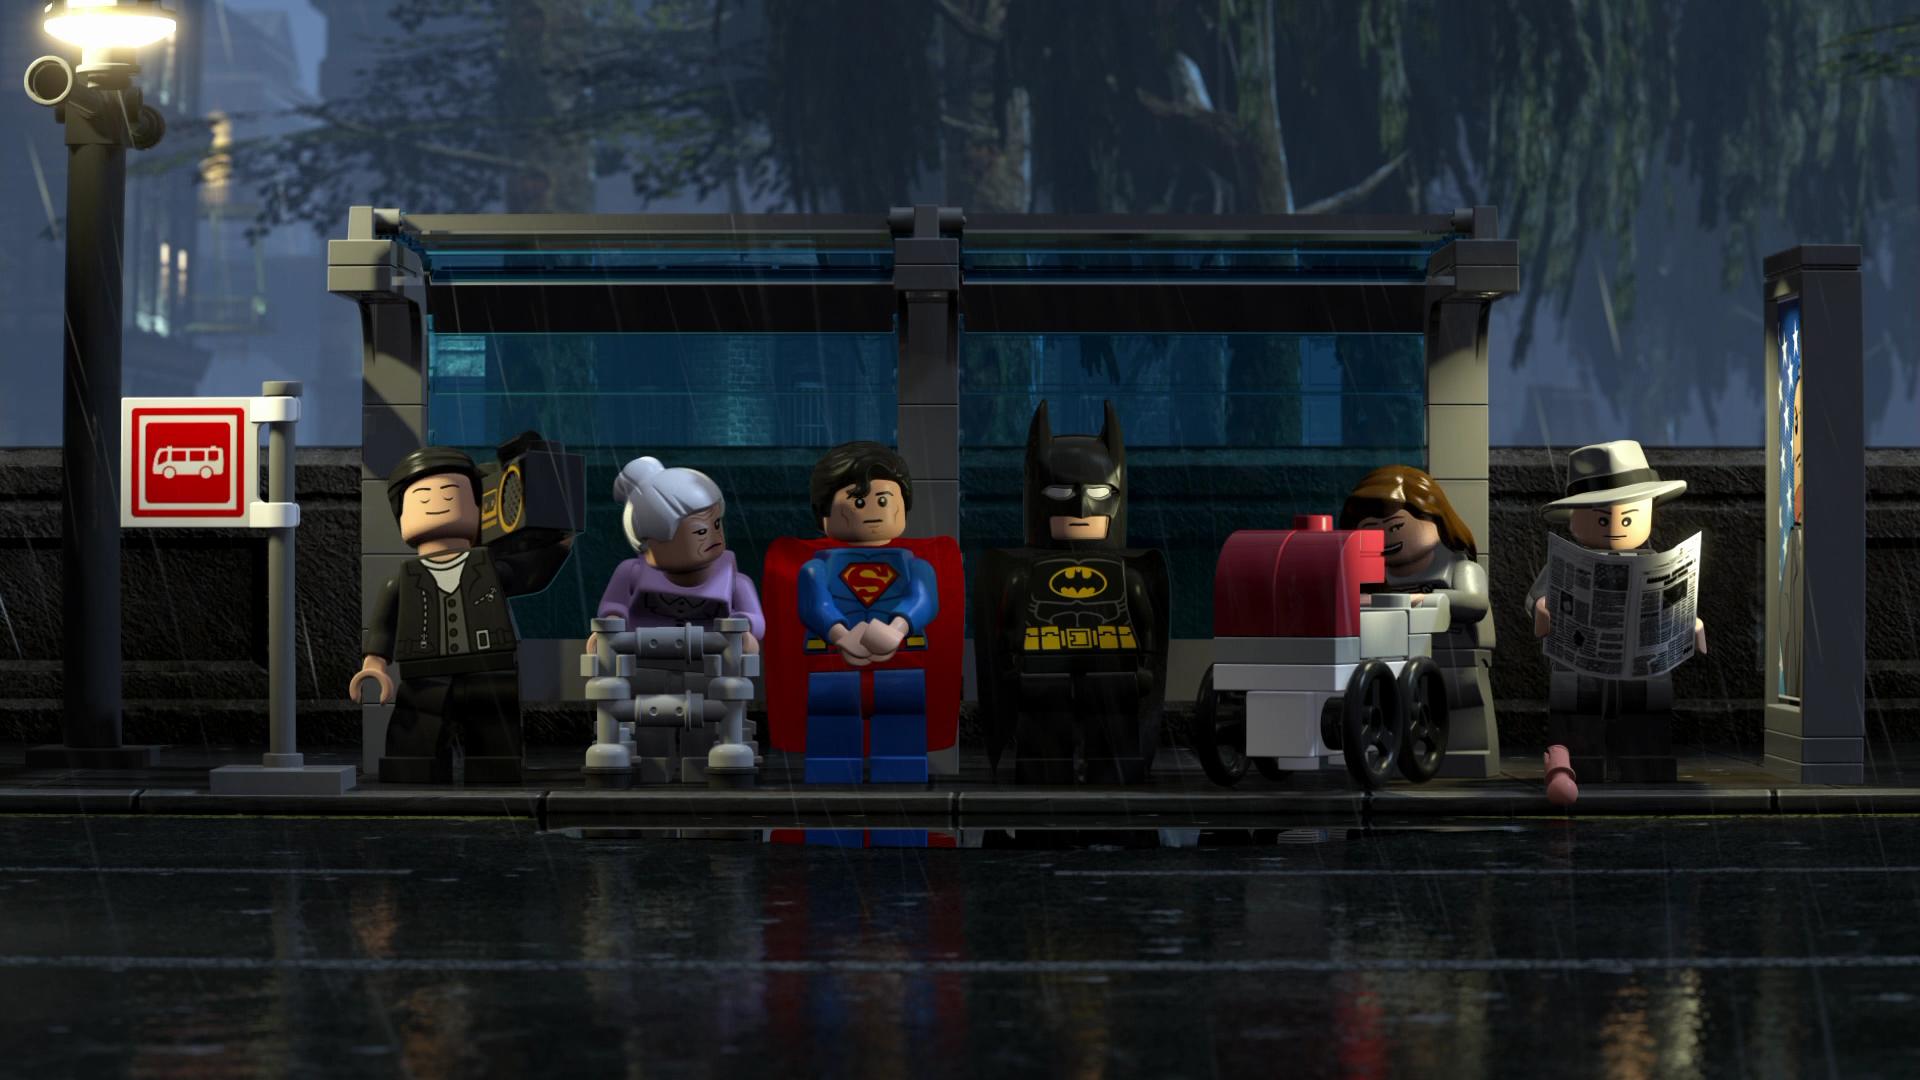 The LEGO Batman Wallpaper High Quality